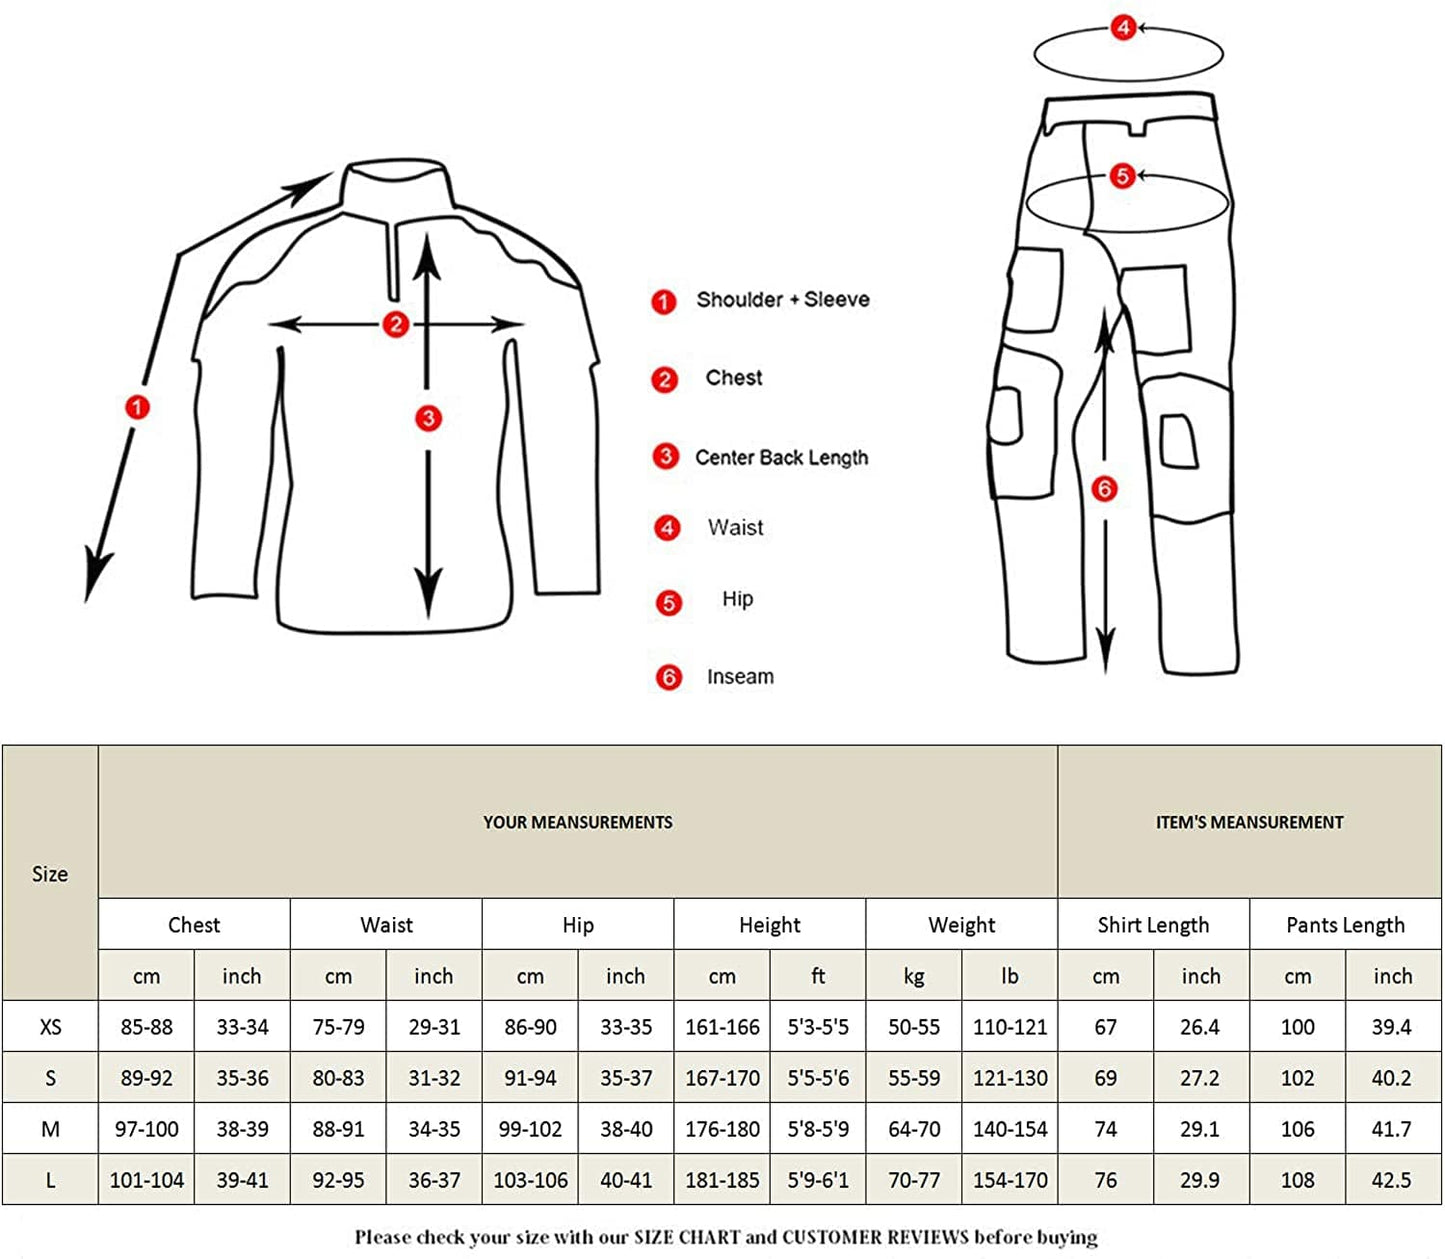 YUSHOW Military Uniforms for Men Tactical Combat Shirt and Pants